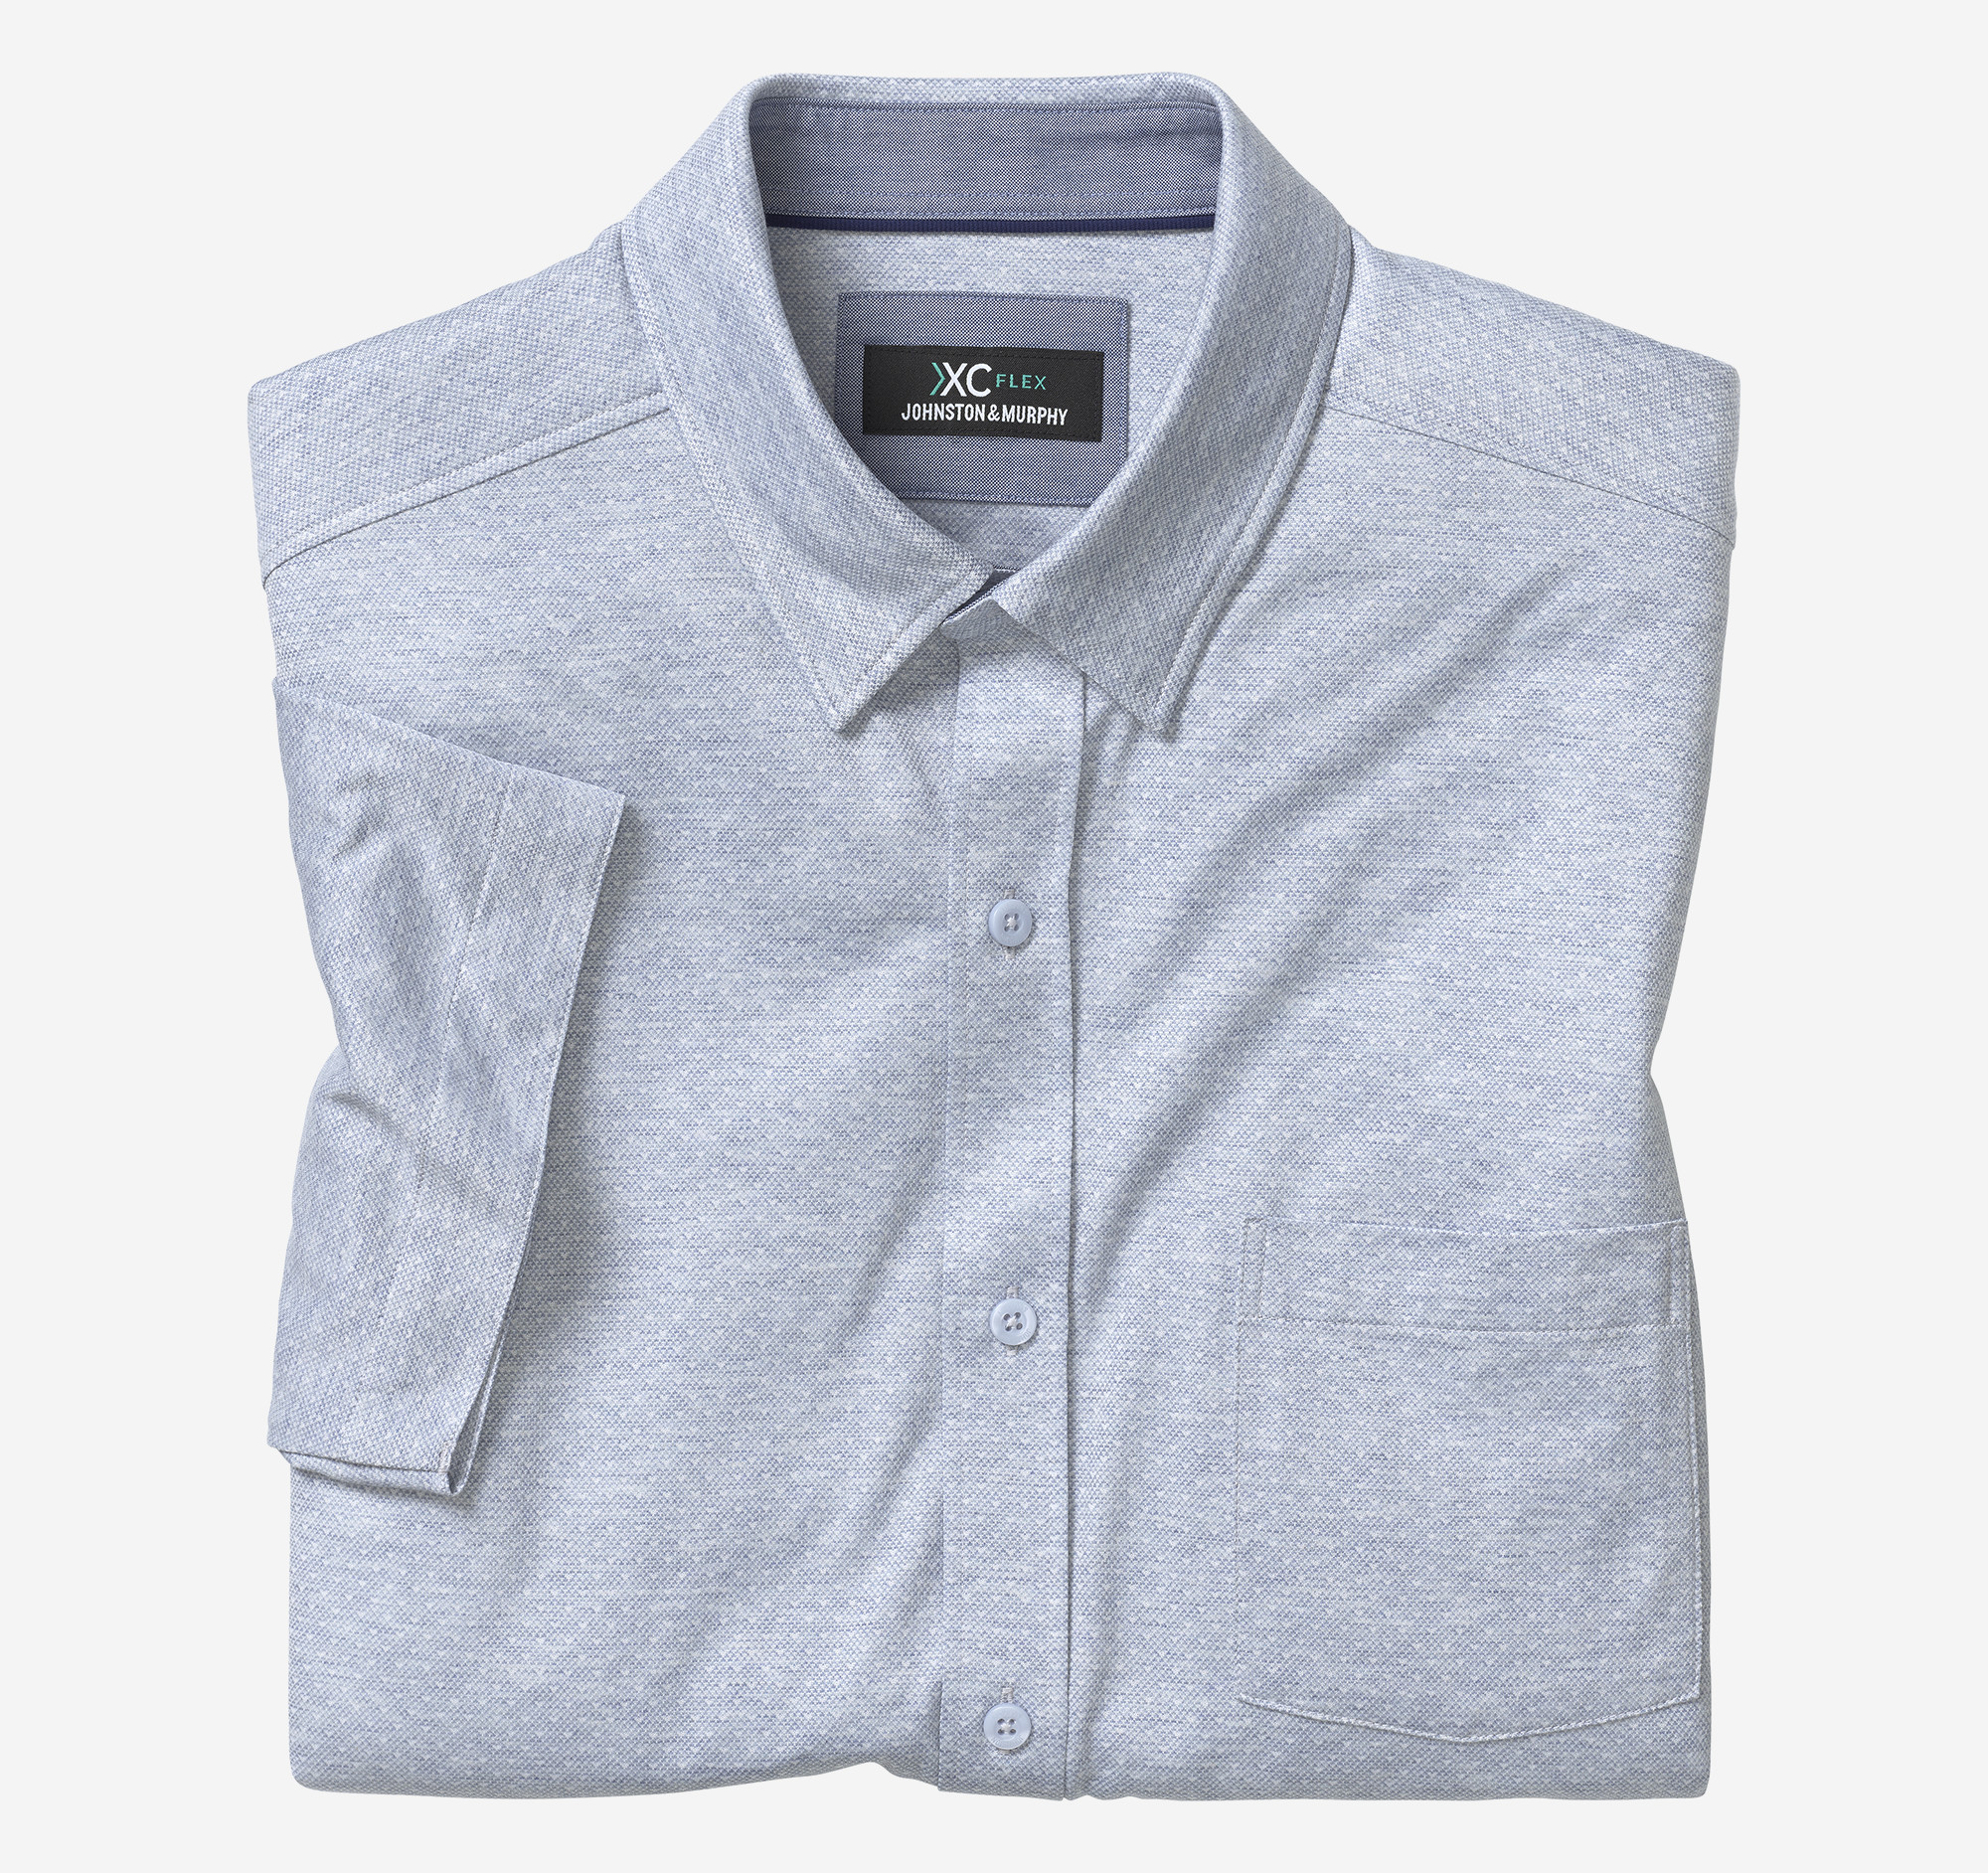 Image of Johnston & Murphy XC Flex Stretch Short-Sleeve Shirt